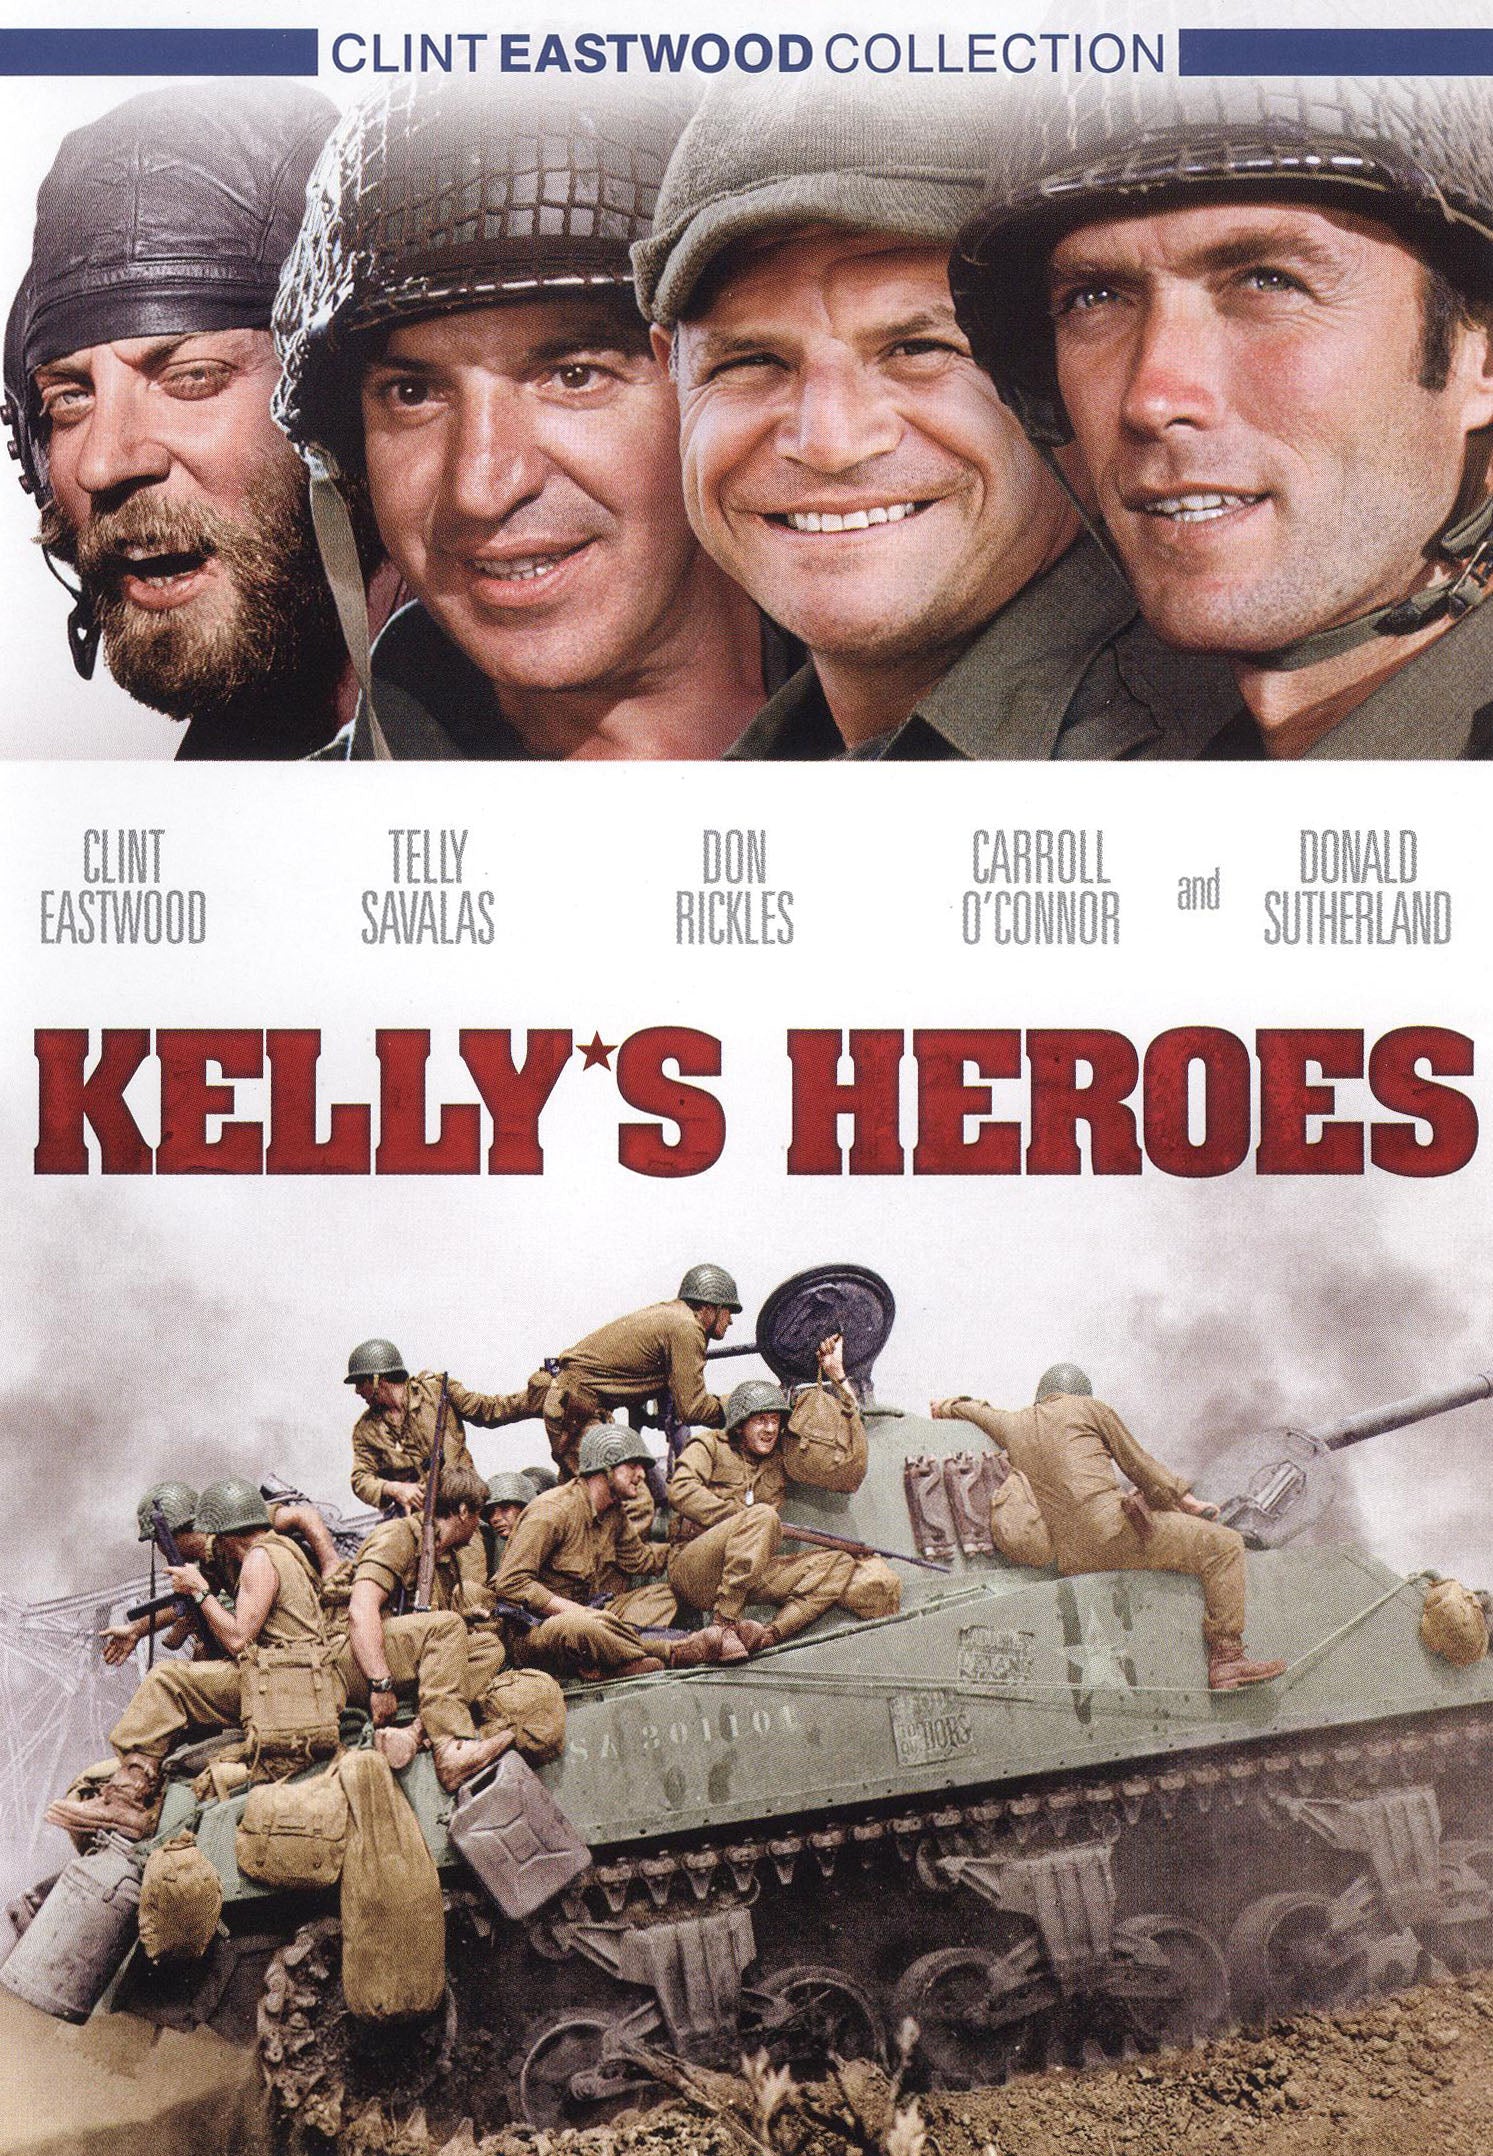 Kelly's Heroes cover art